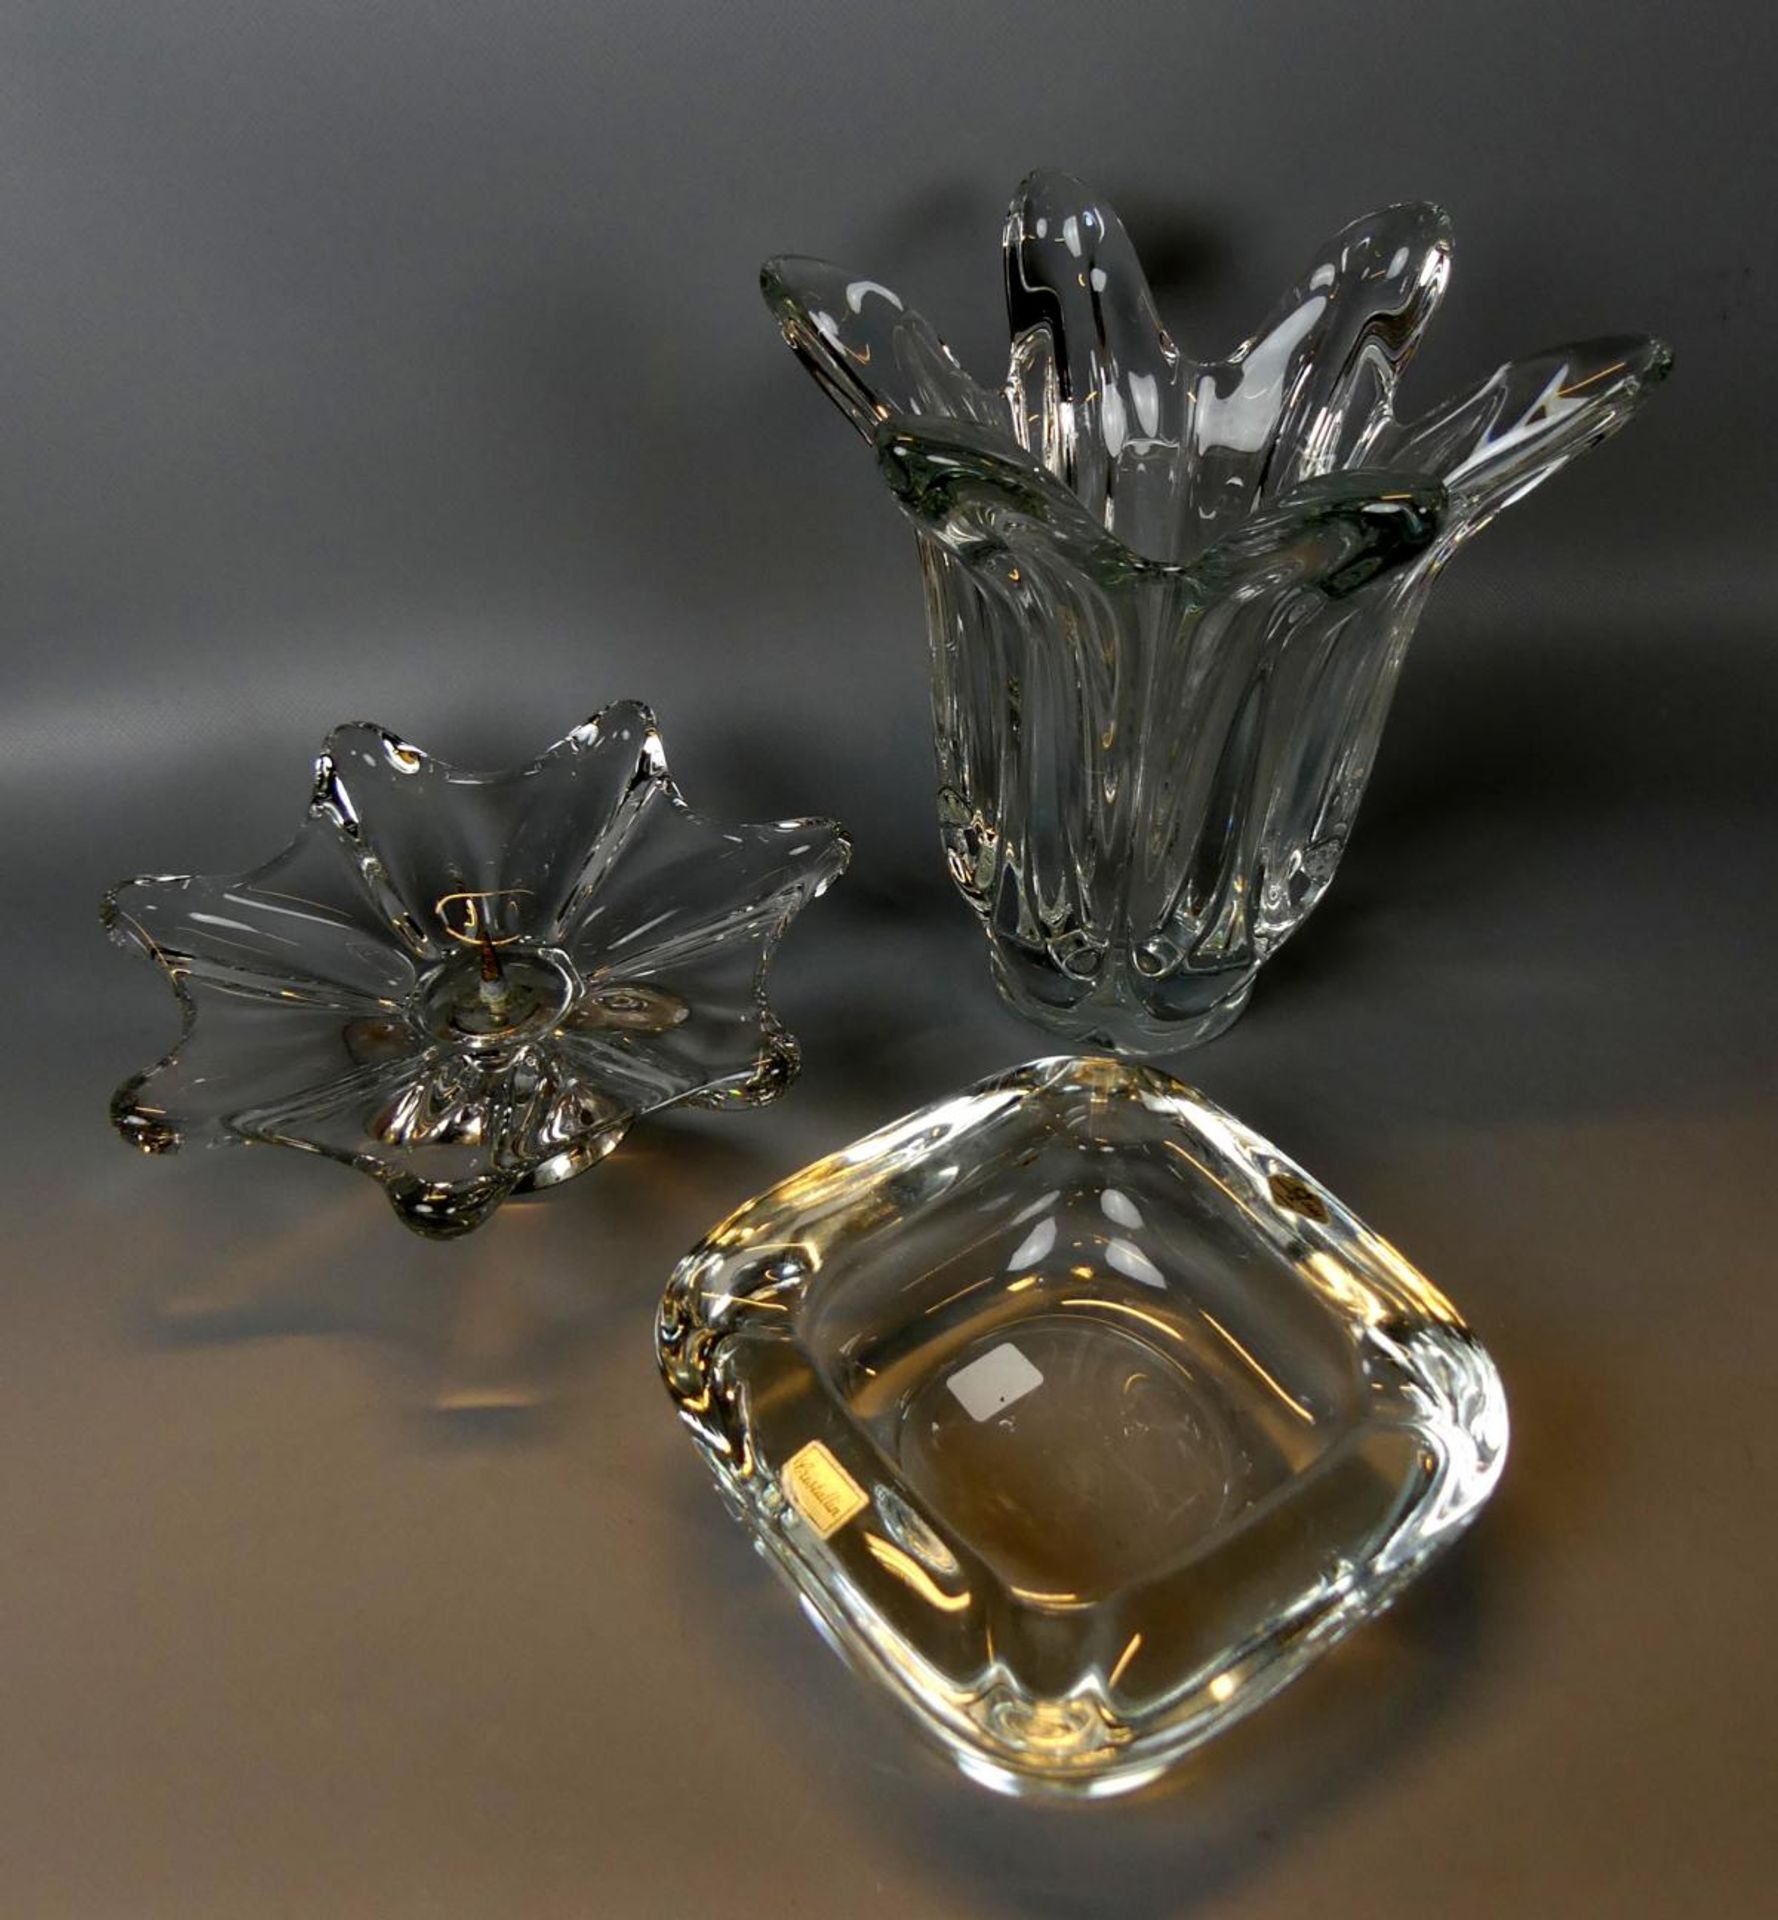 3 Teile Glas; Vase, Ascher, Kerzenhalter, Art Vannes France Crystal,